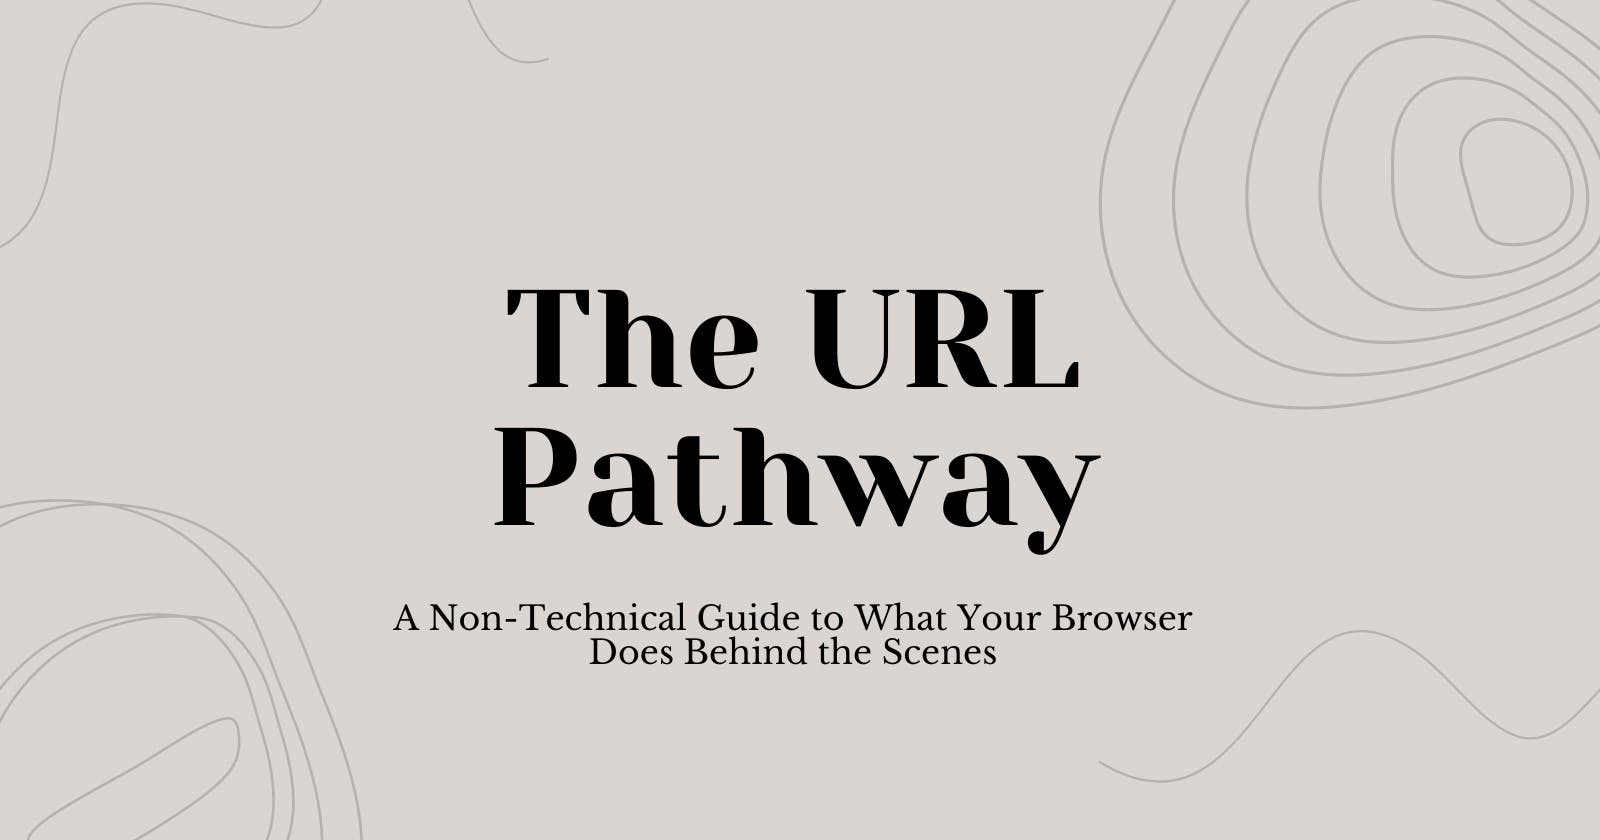 The URL Pathway